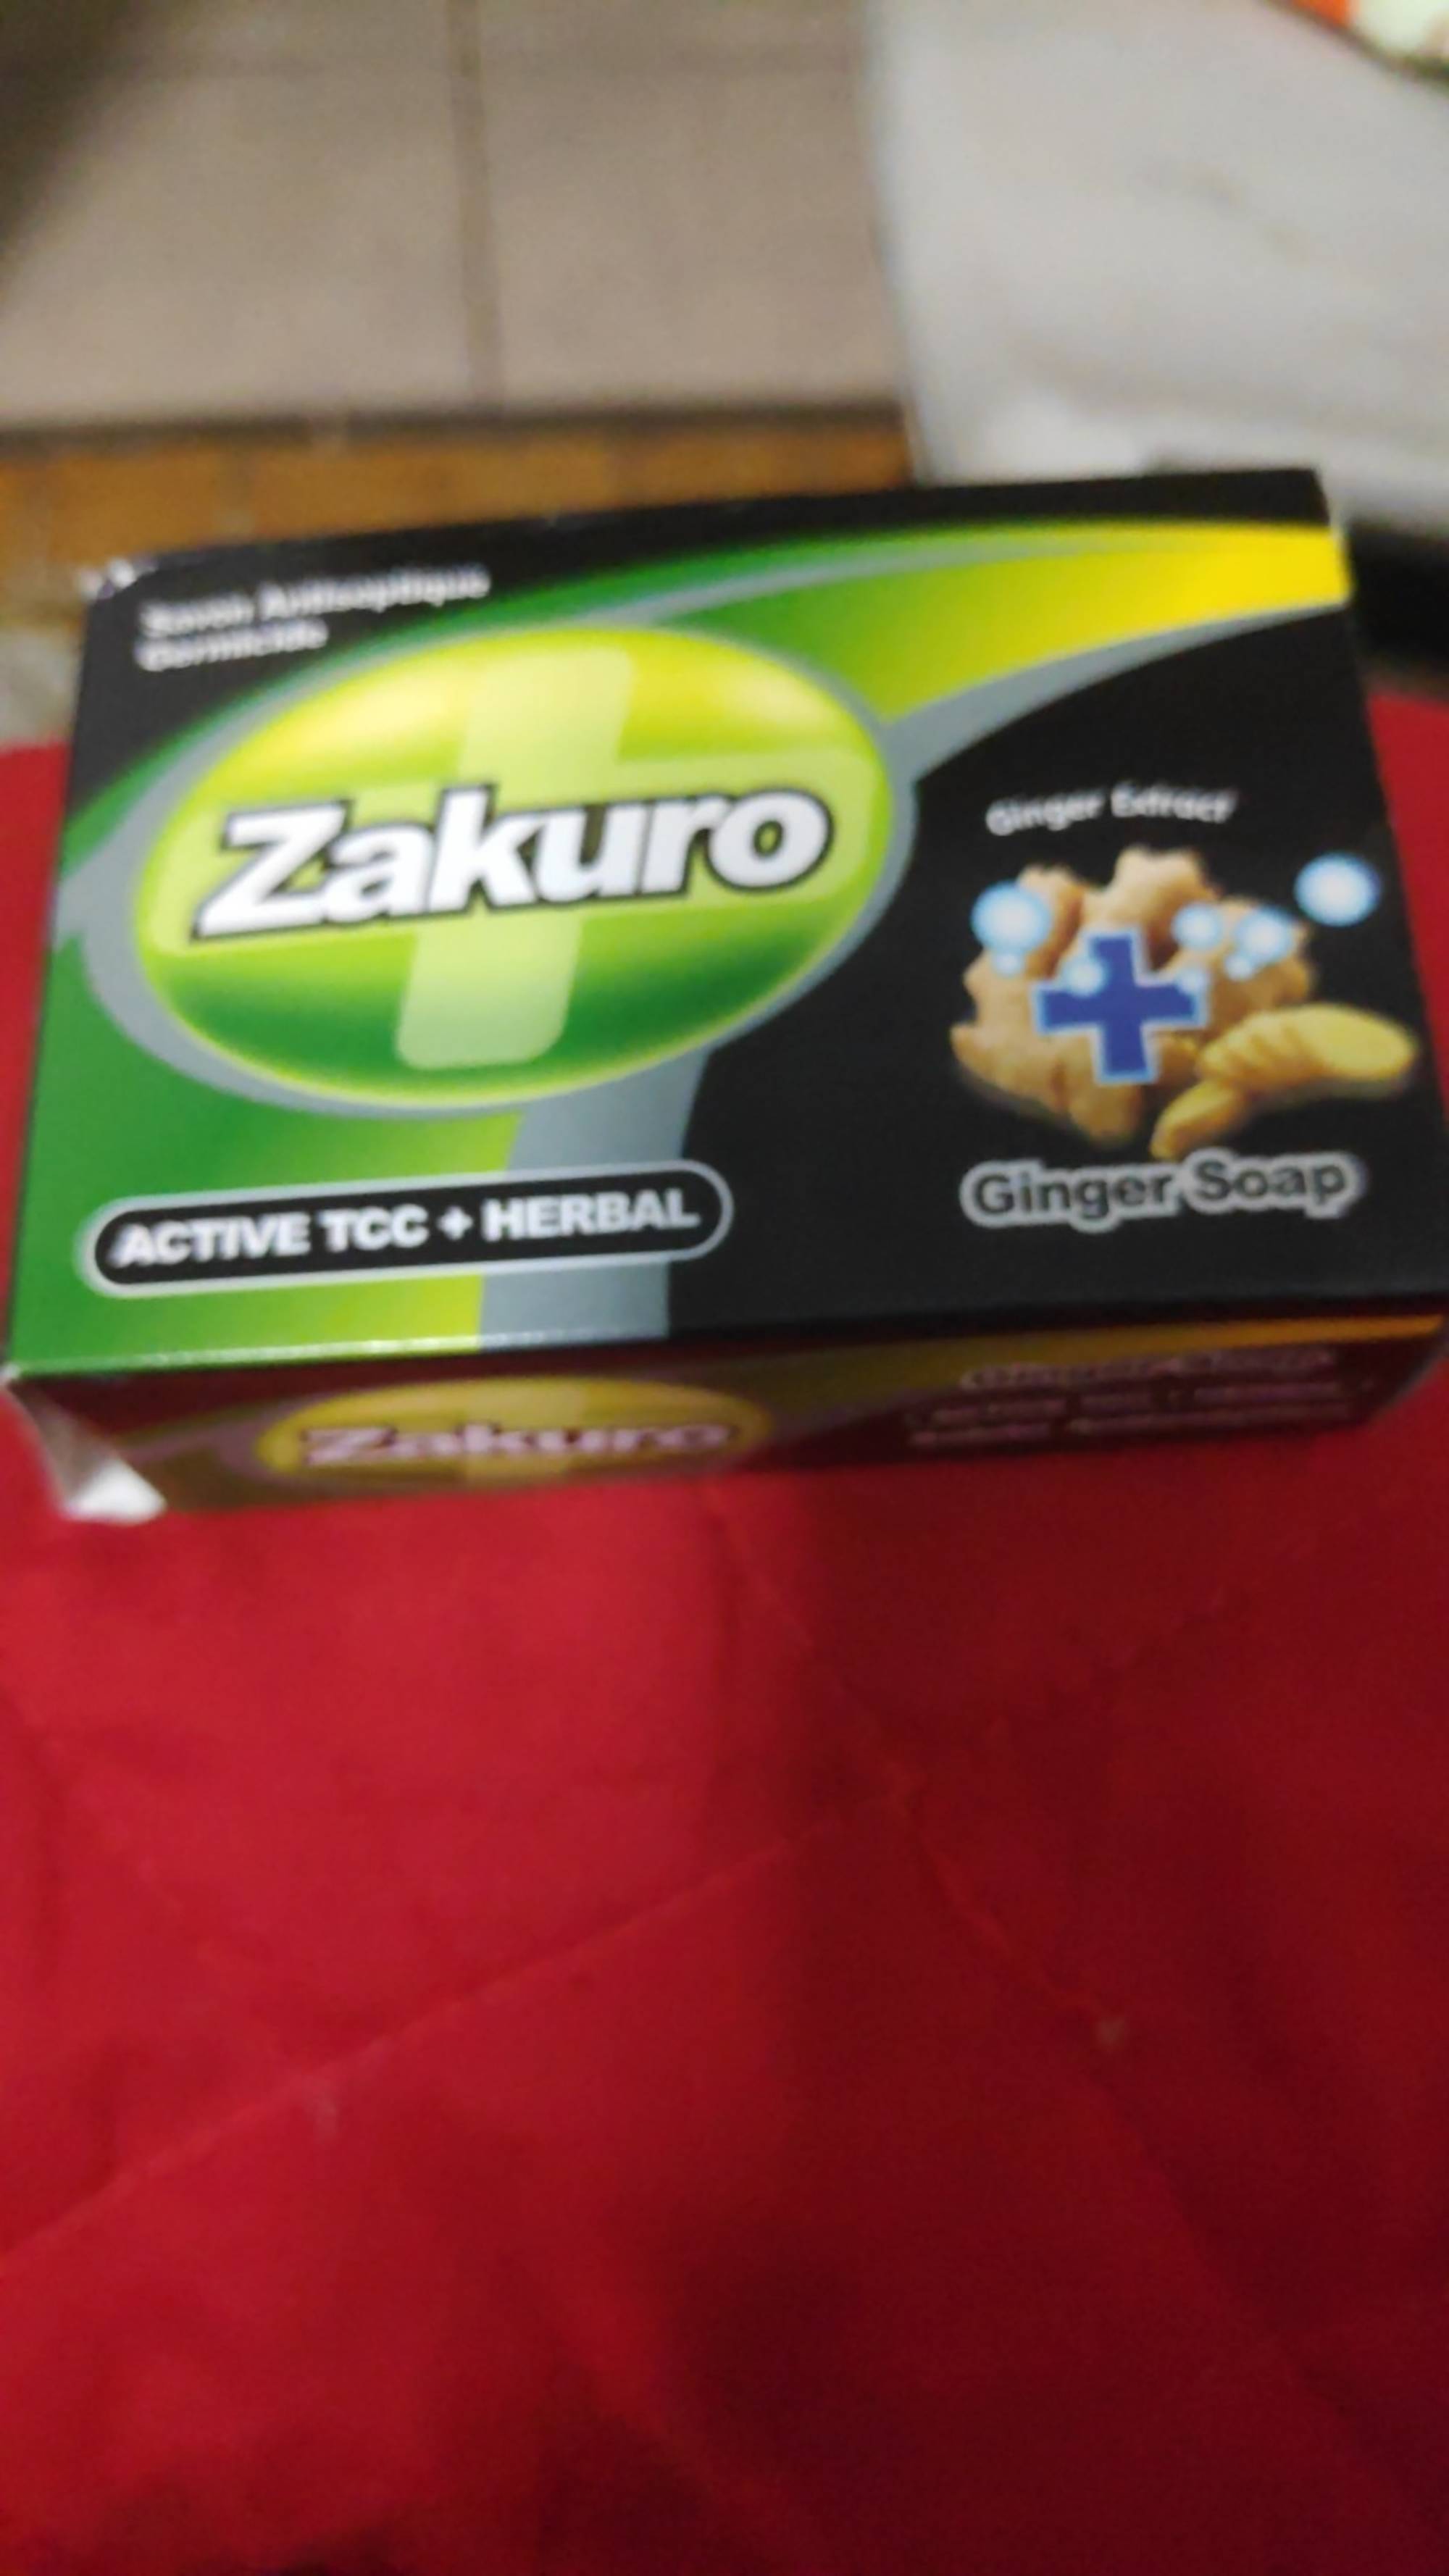 ZAKURO - Active TCC + herbal - Ginger soap